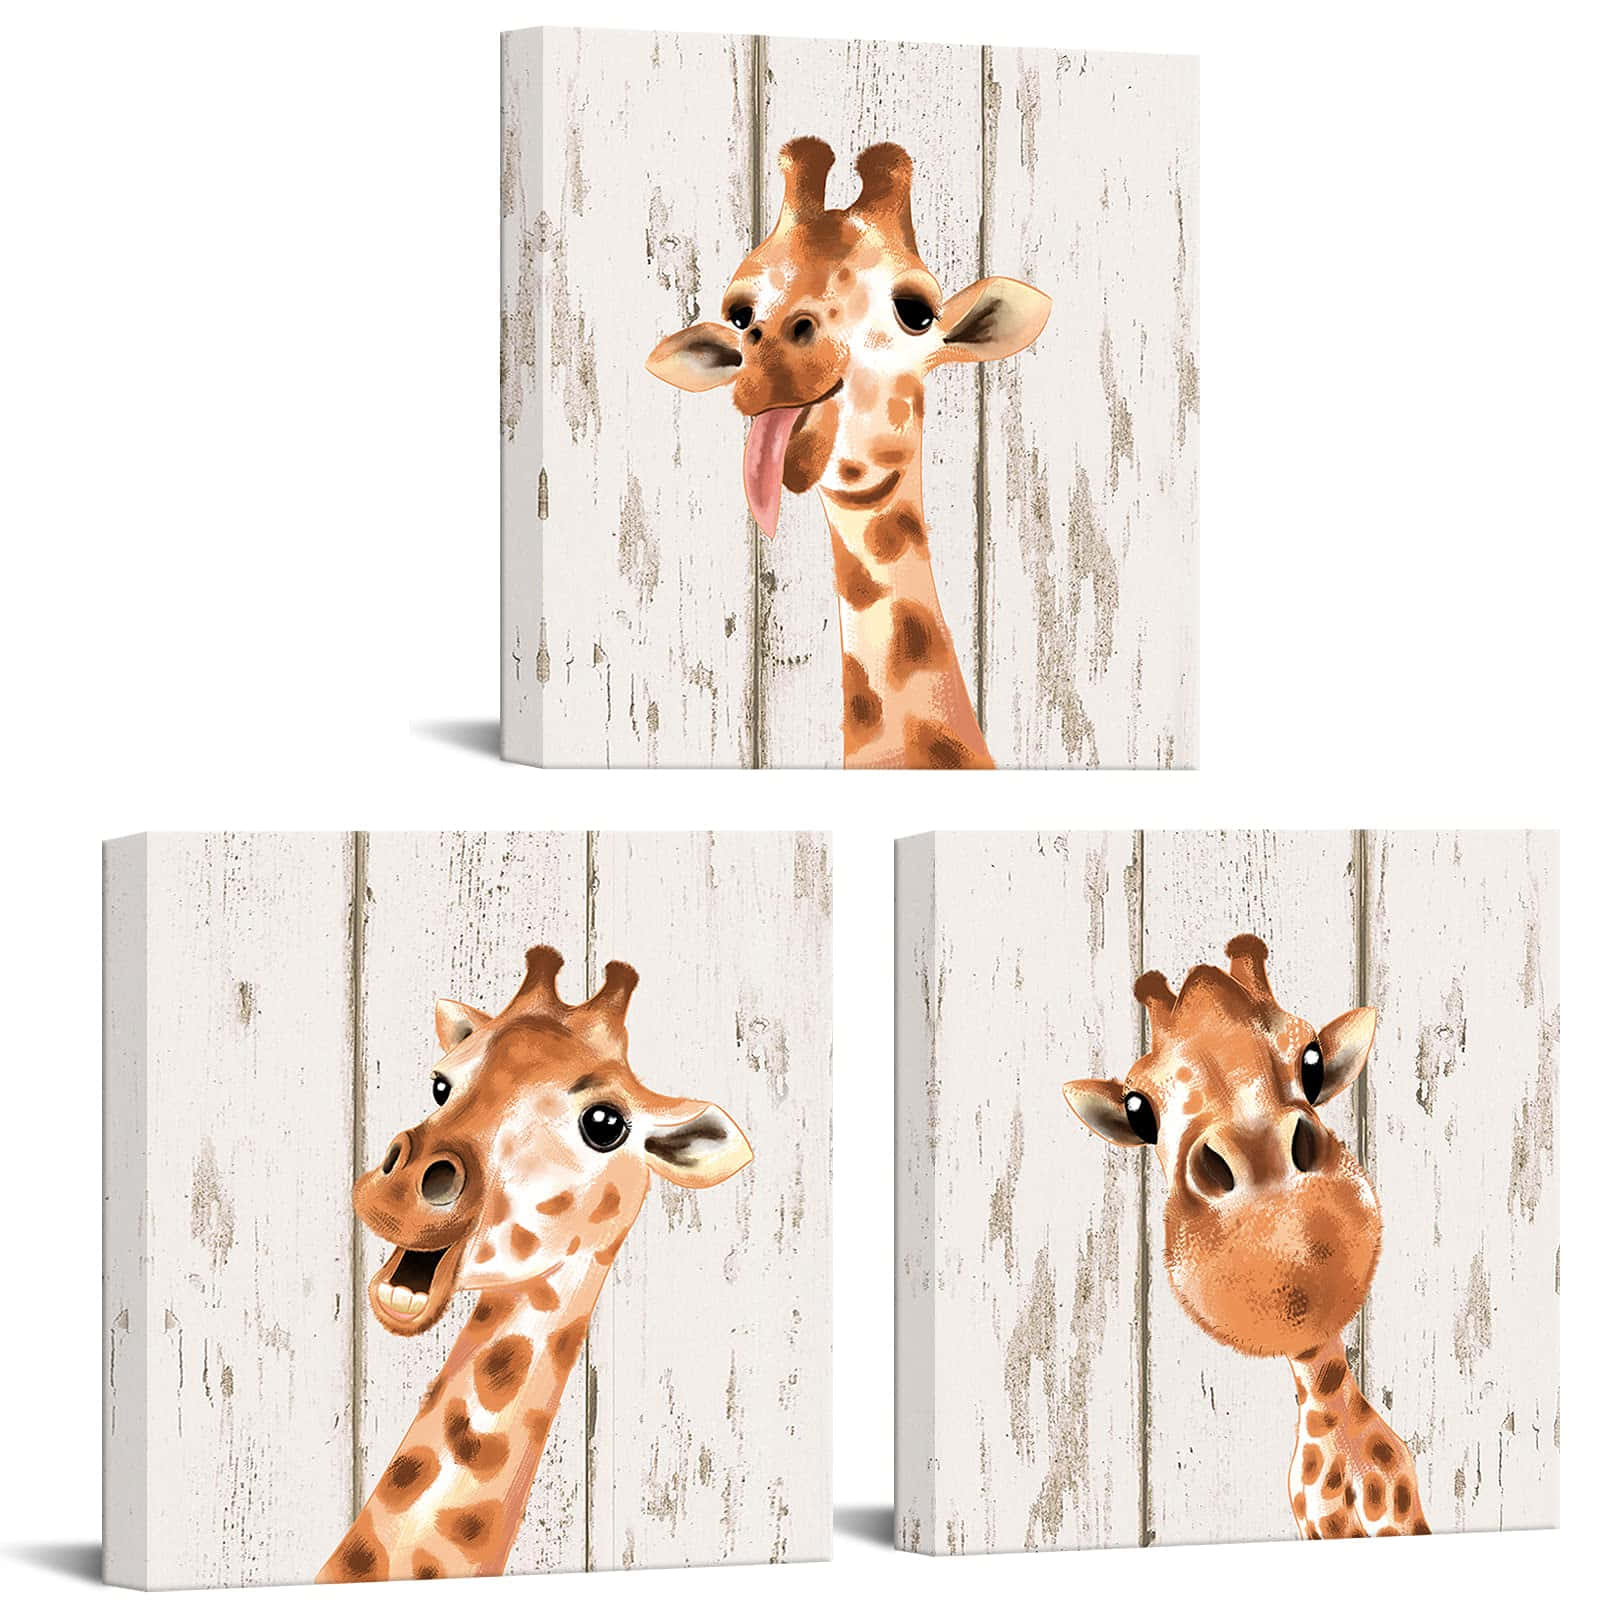 Funny Giraffe Face Wooden Blocks Picture